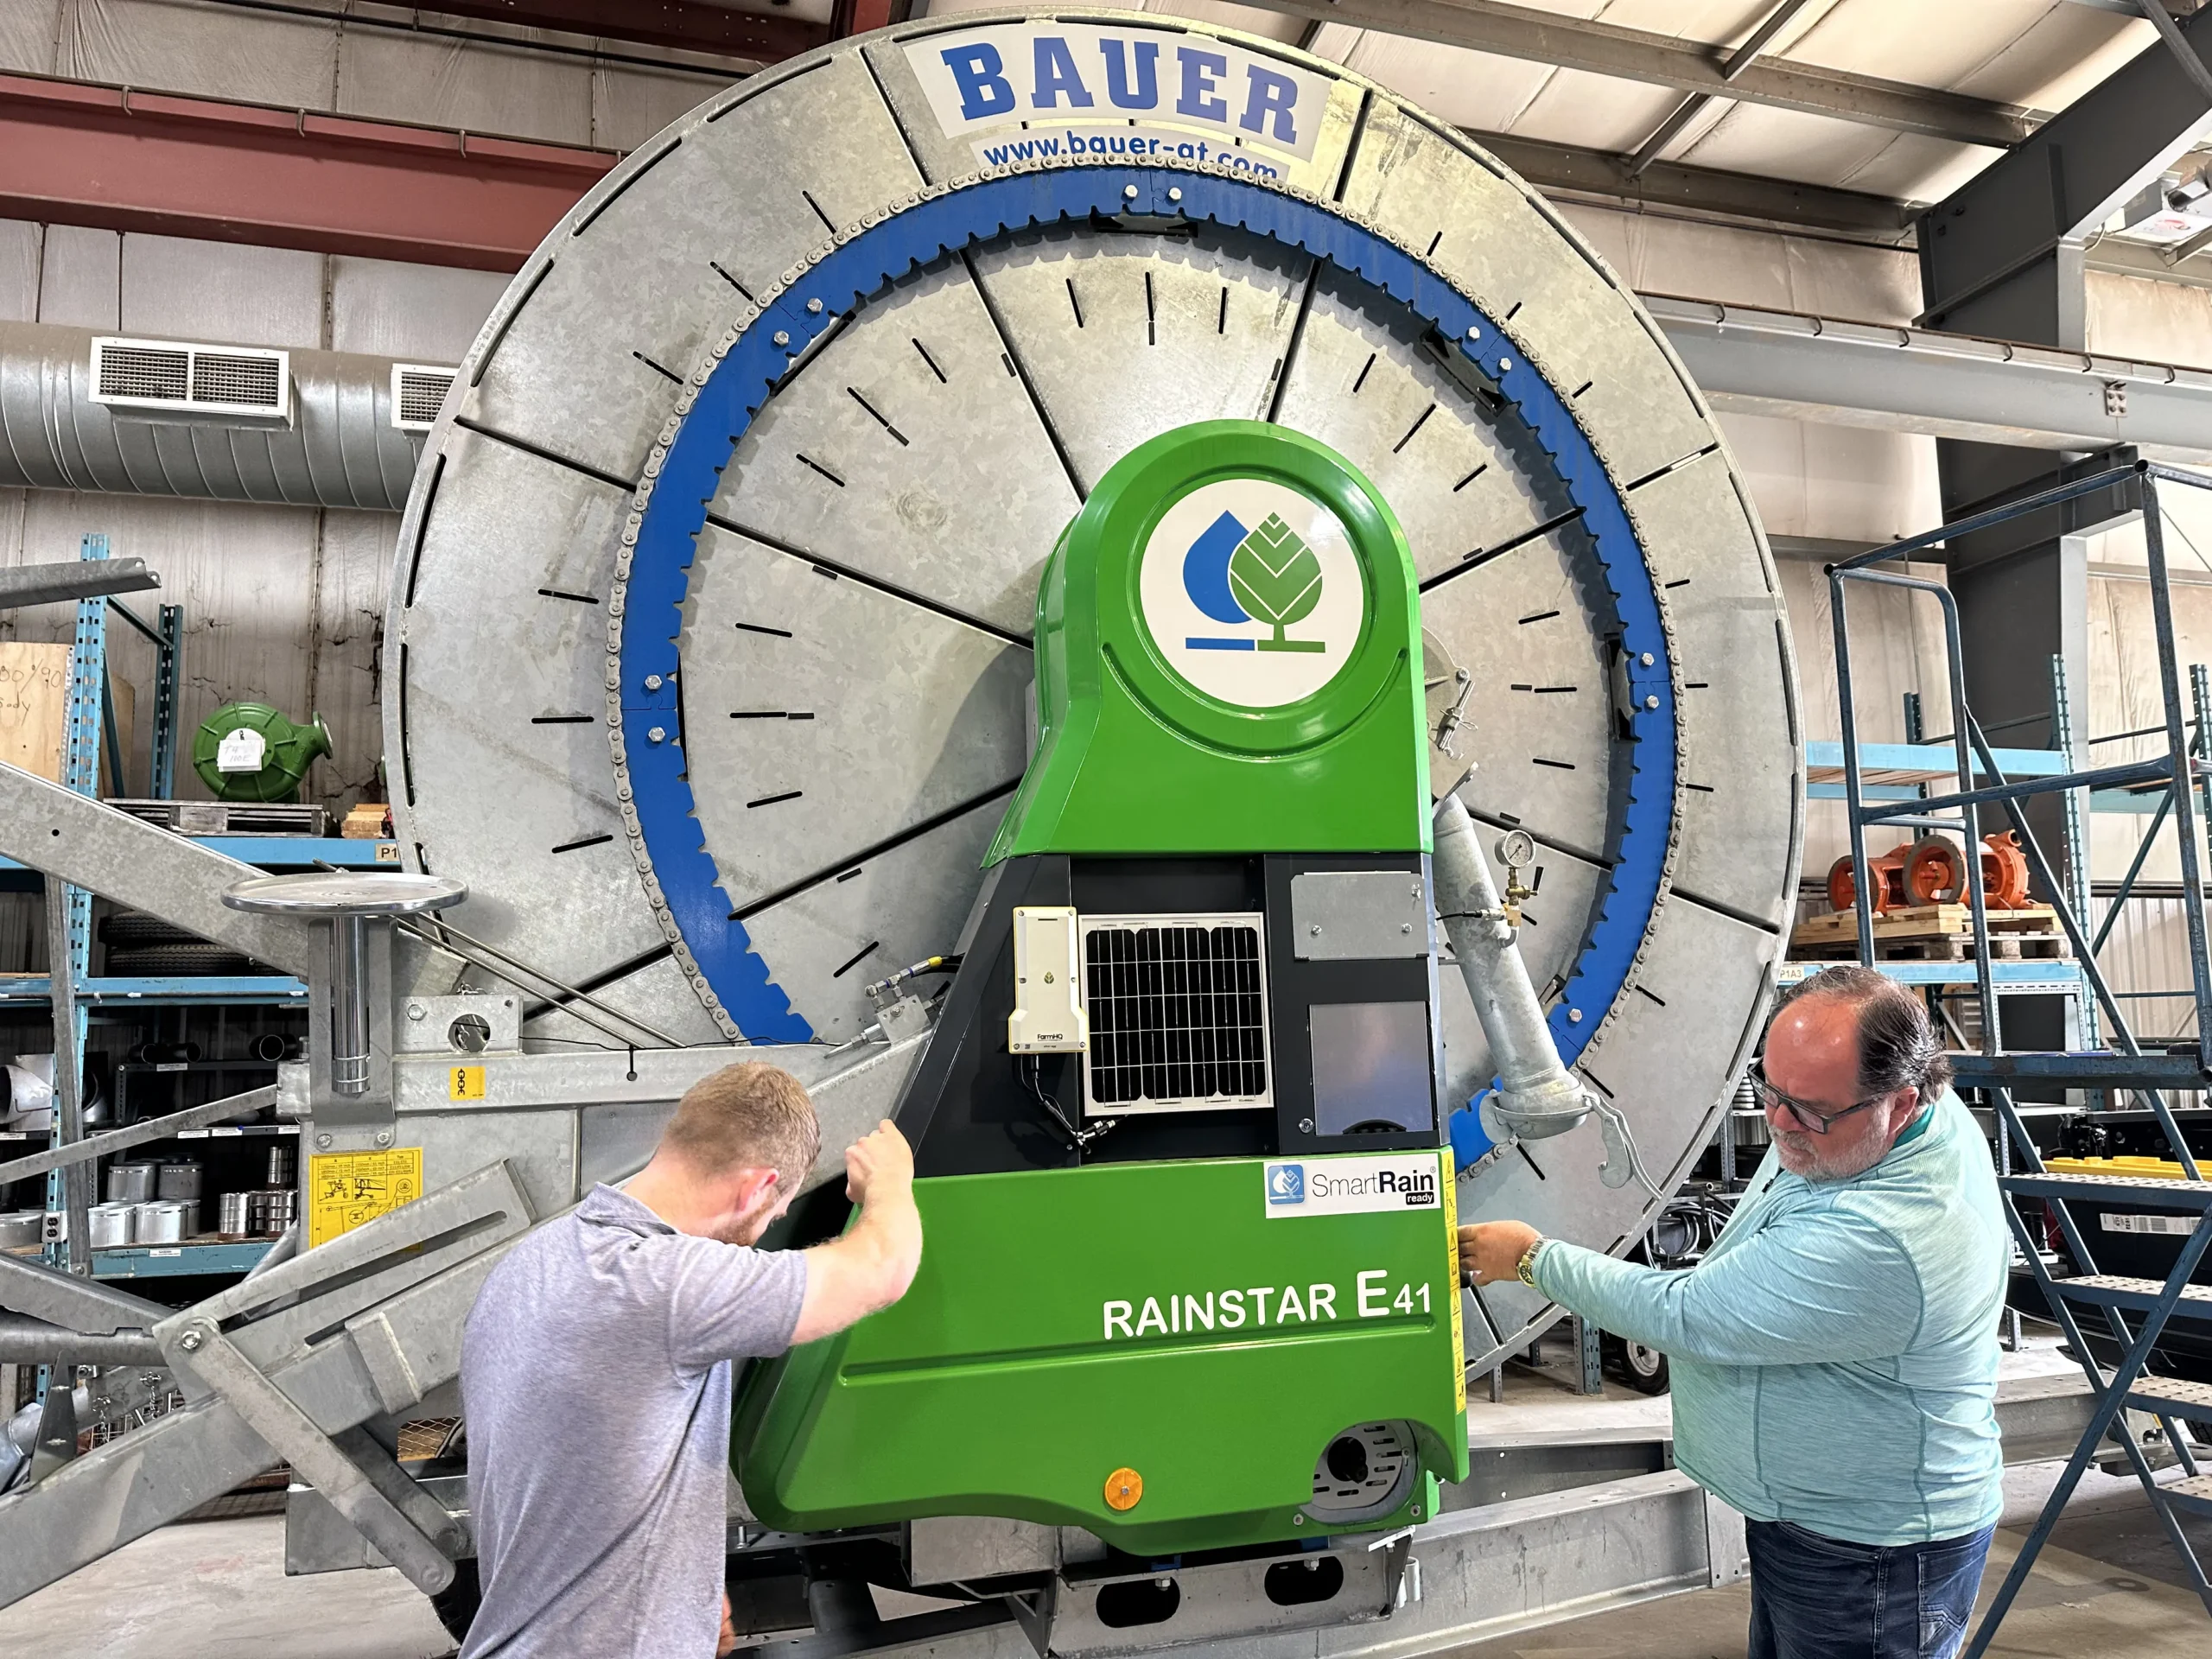 Bauer Hose Reel Irrigation System with FarmHQ